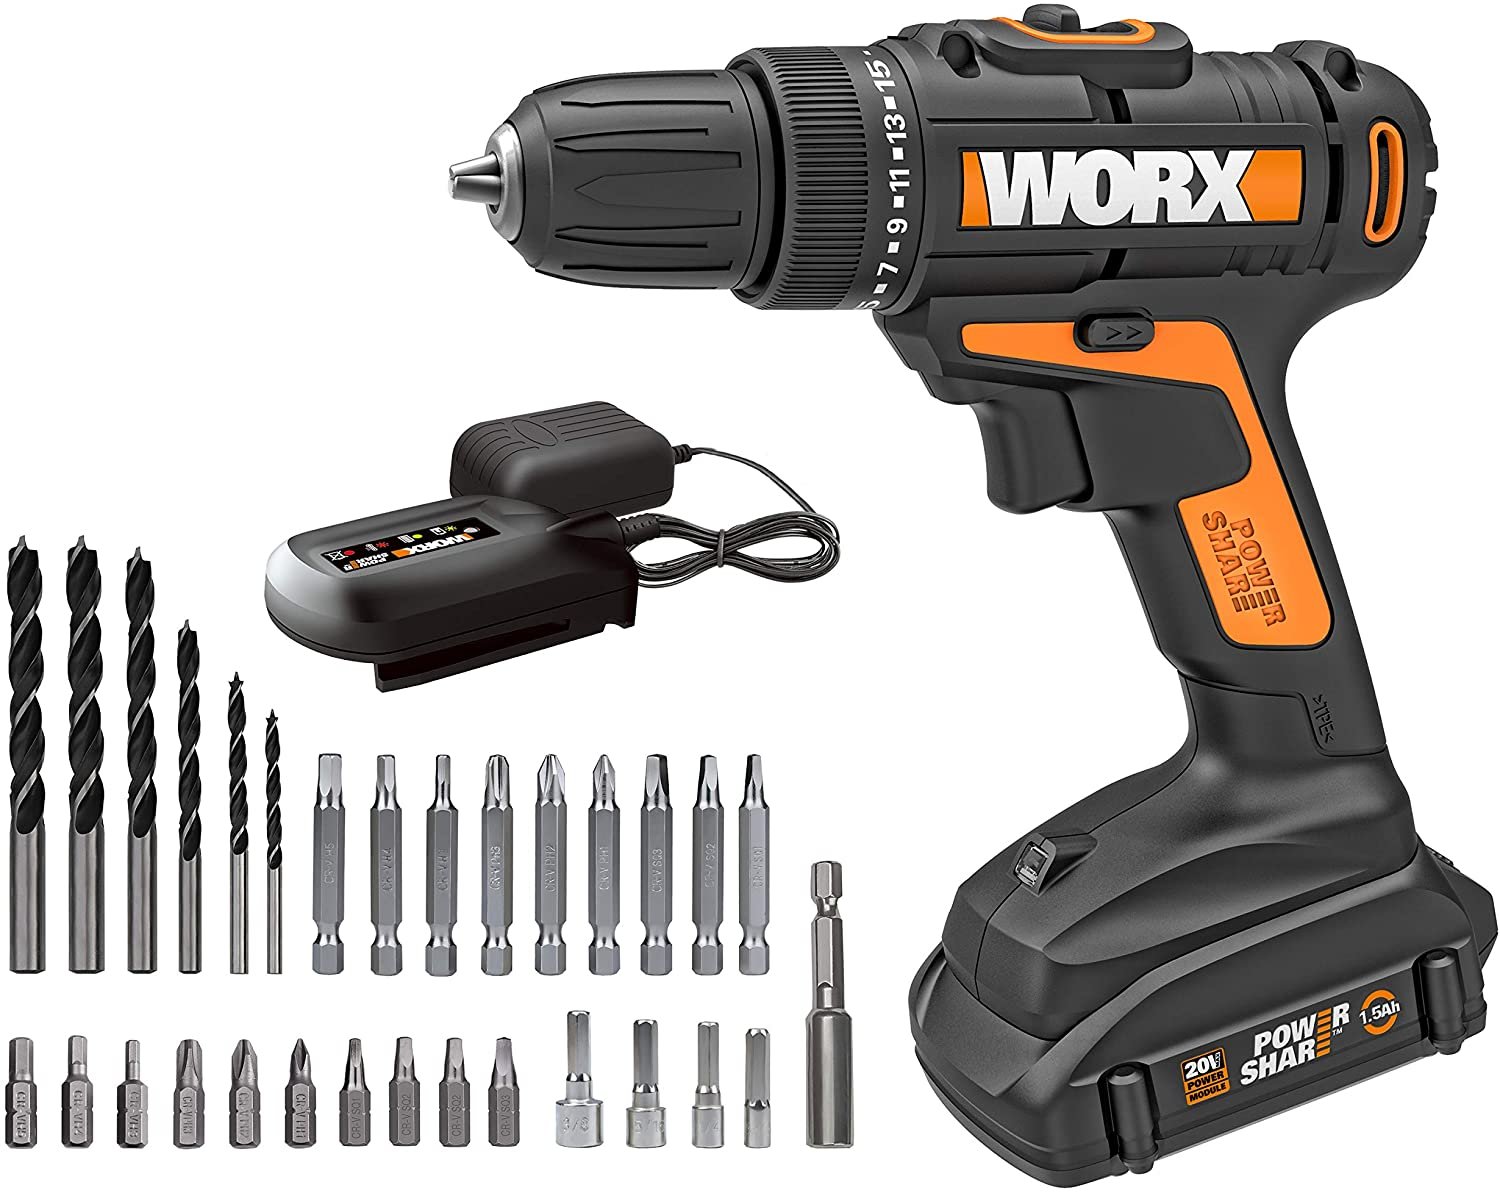 Worx Wx101l.4 20v Cordless Drill Driver